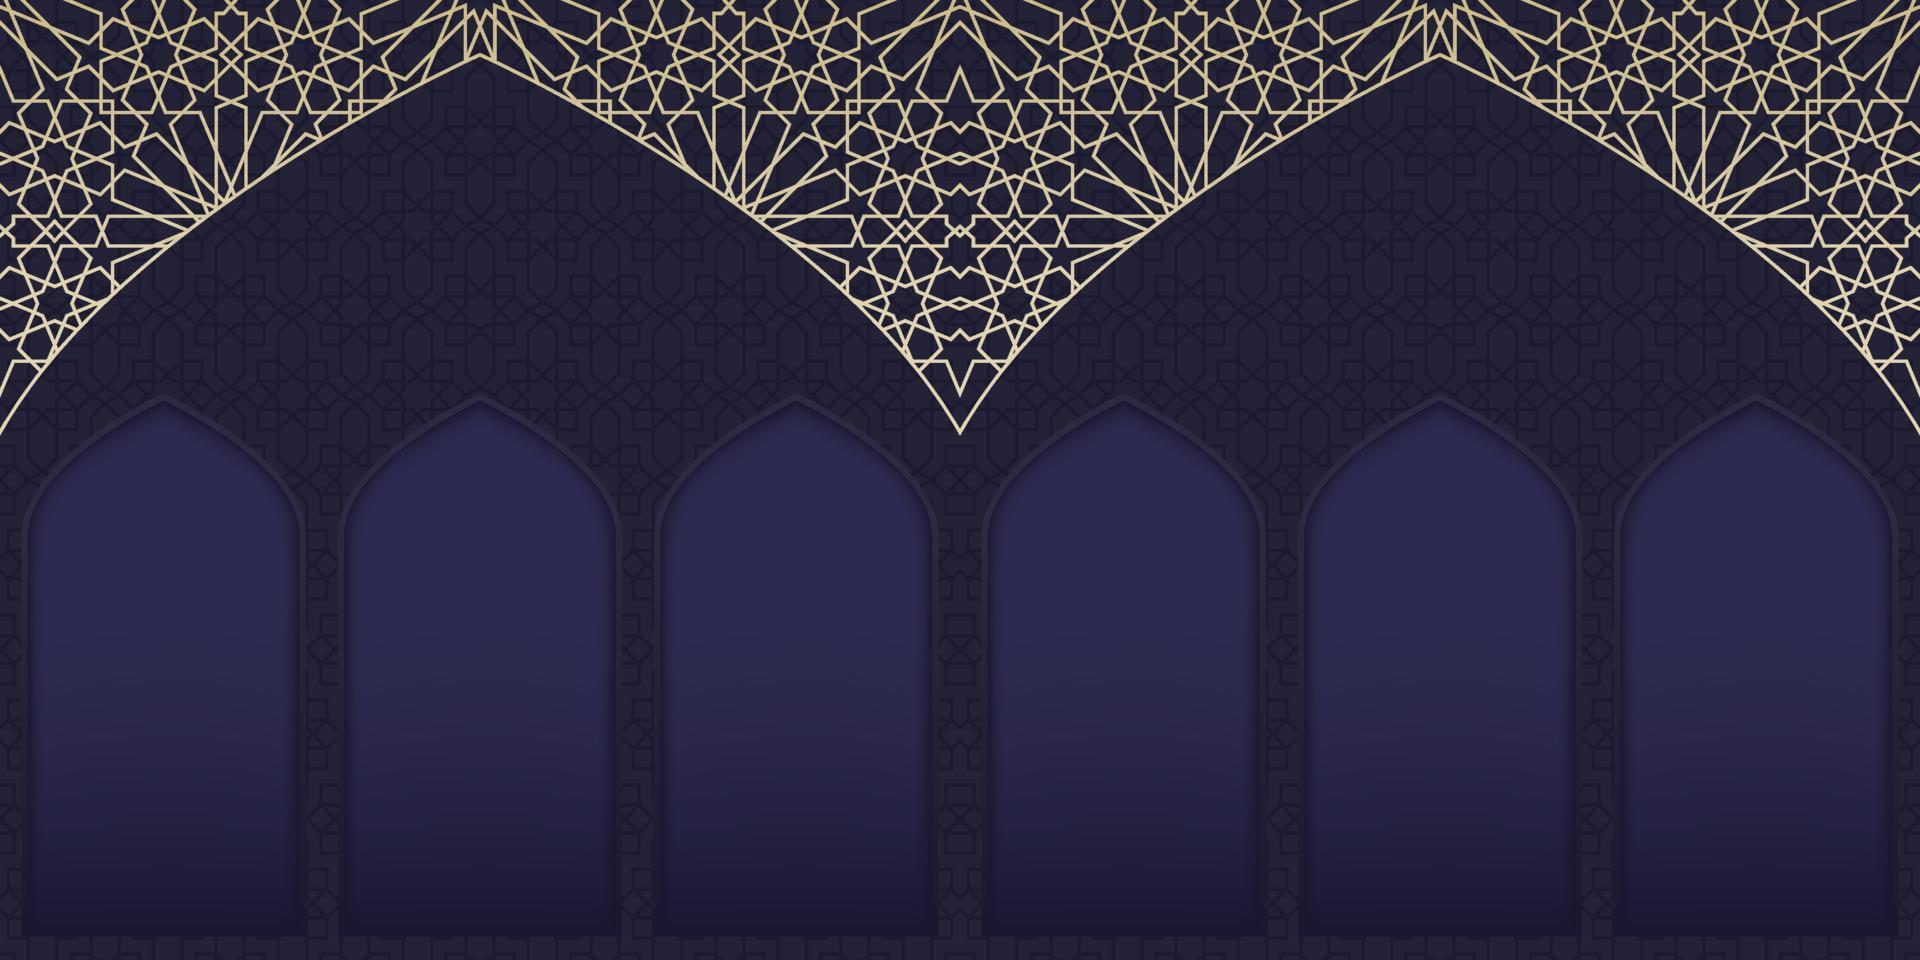 Ramadan Kareem background. Islamic background with arabesque pattern and window mosque. Eid Mubarak background. Islamic vector illustration